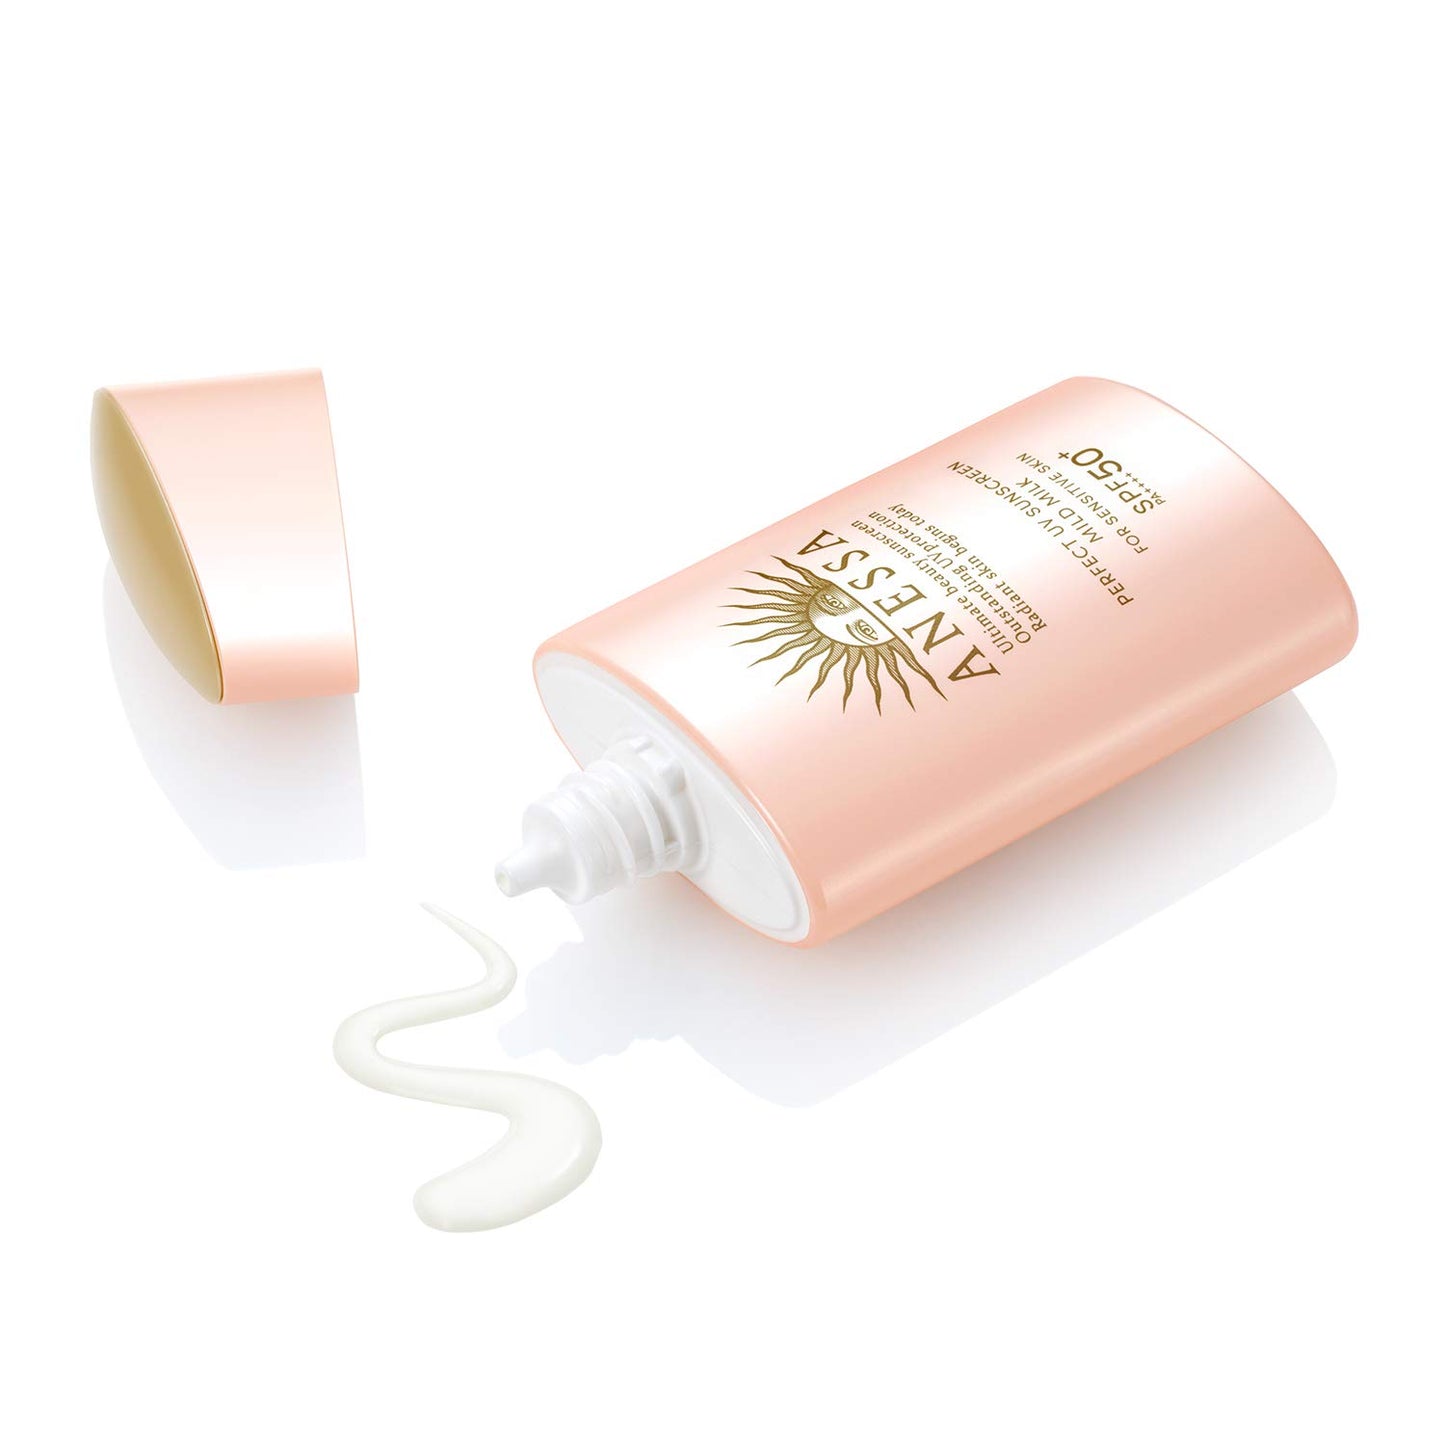 Shiseido Anessa Perfect UV Sunscreen Mild Milk SPF 50+ 2 oz